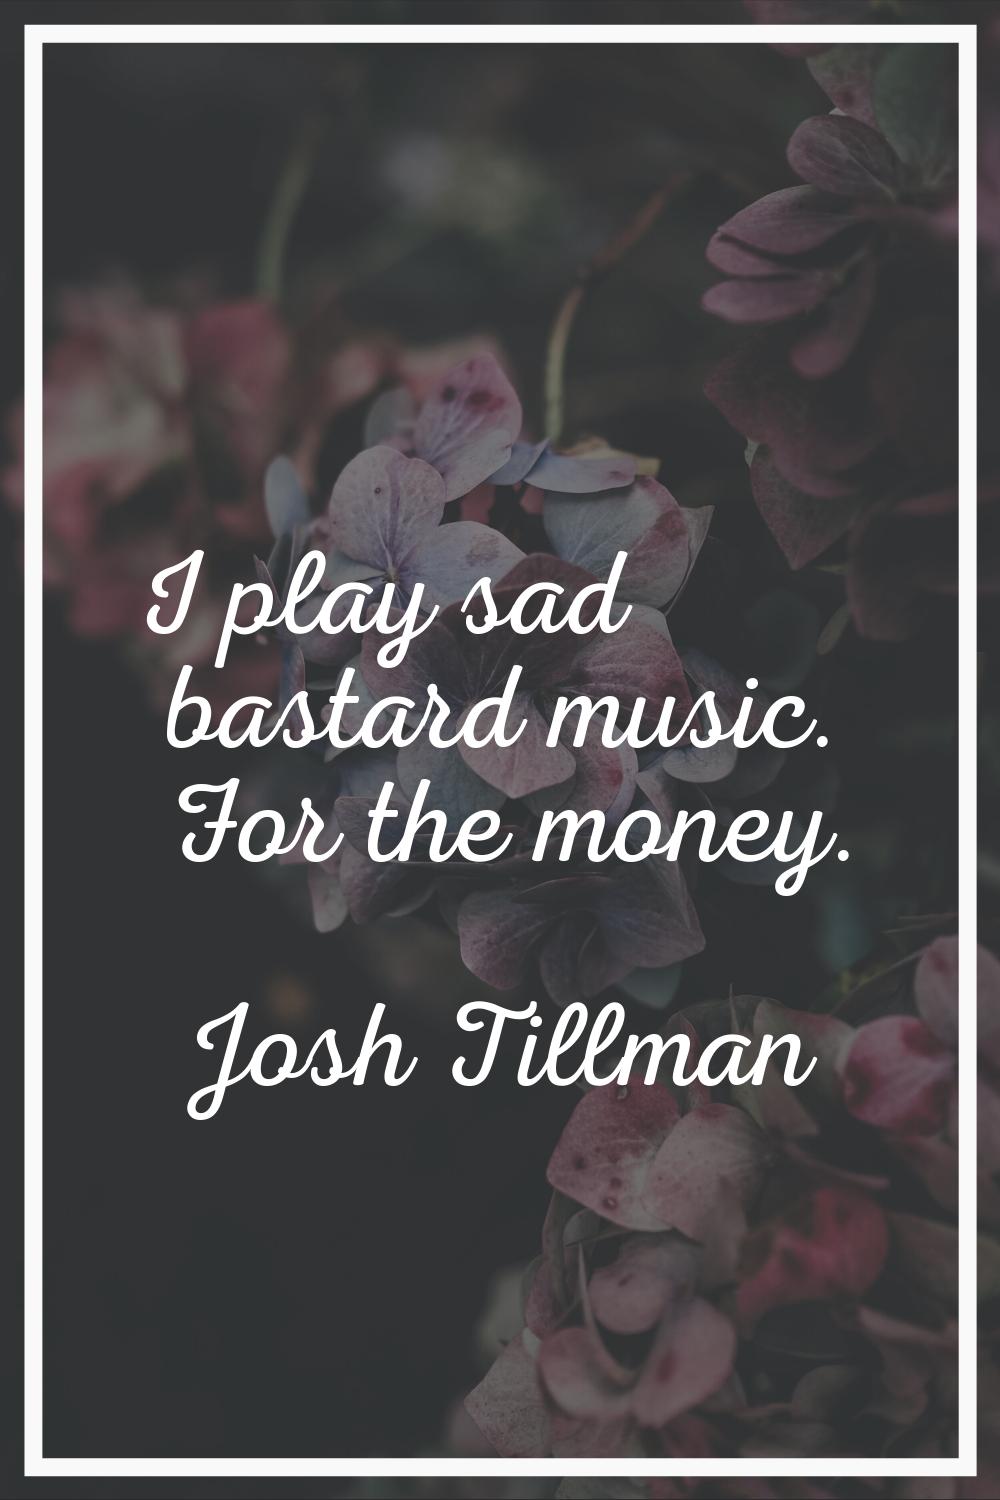 I play sad bastard music. For the money.